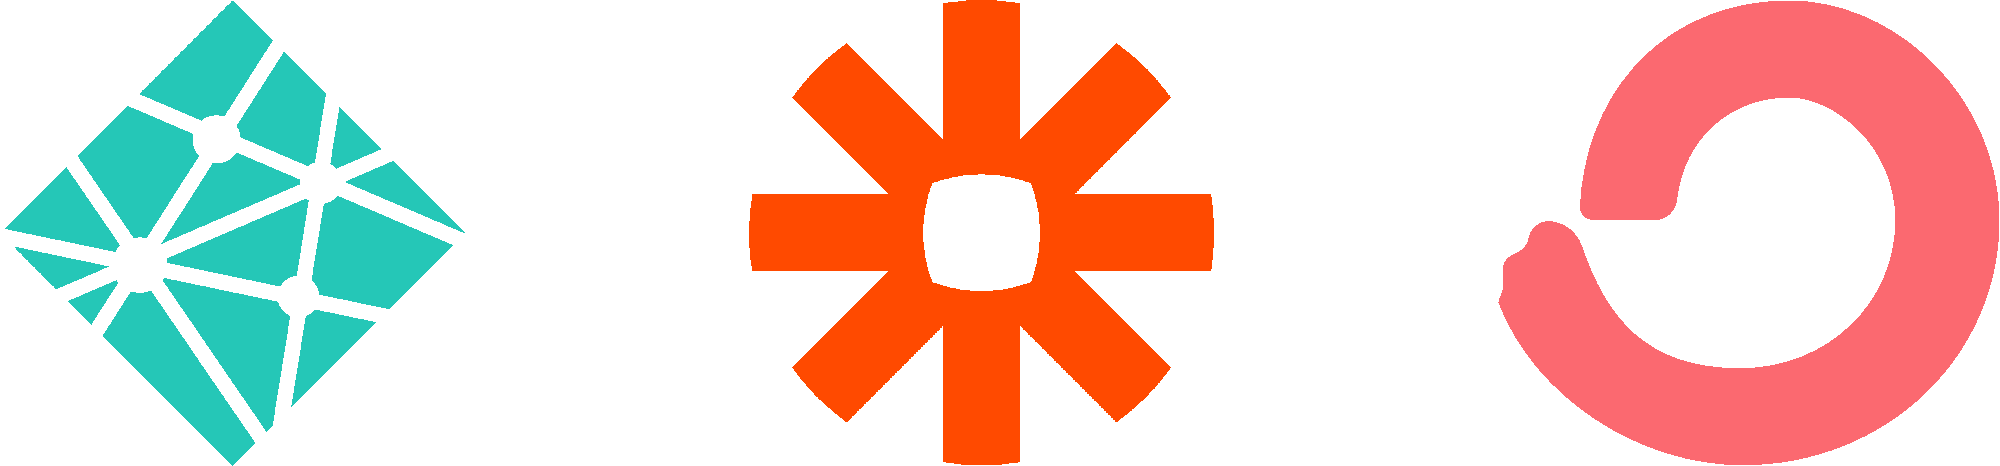 netlify, zapier and convertkit logo